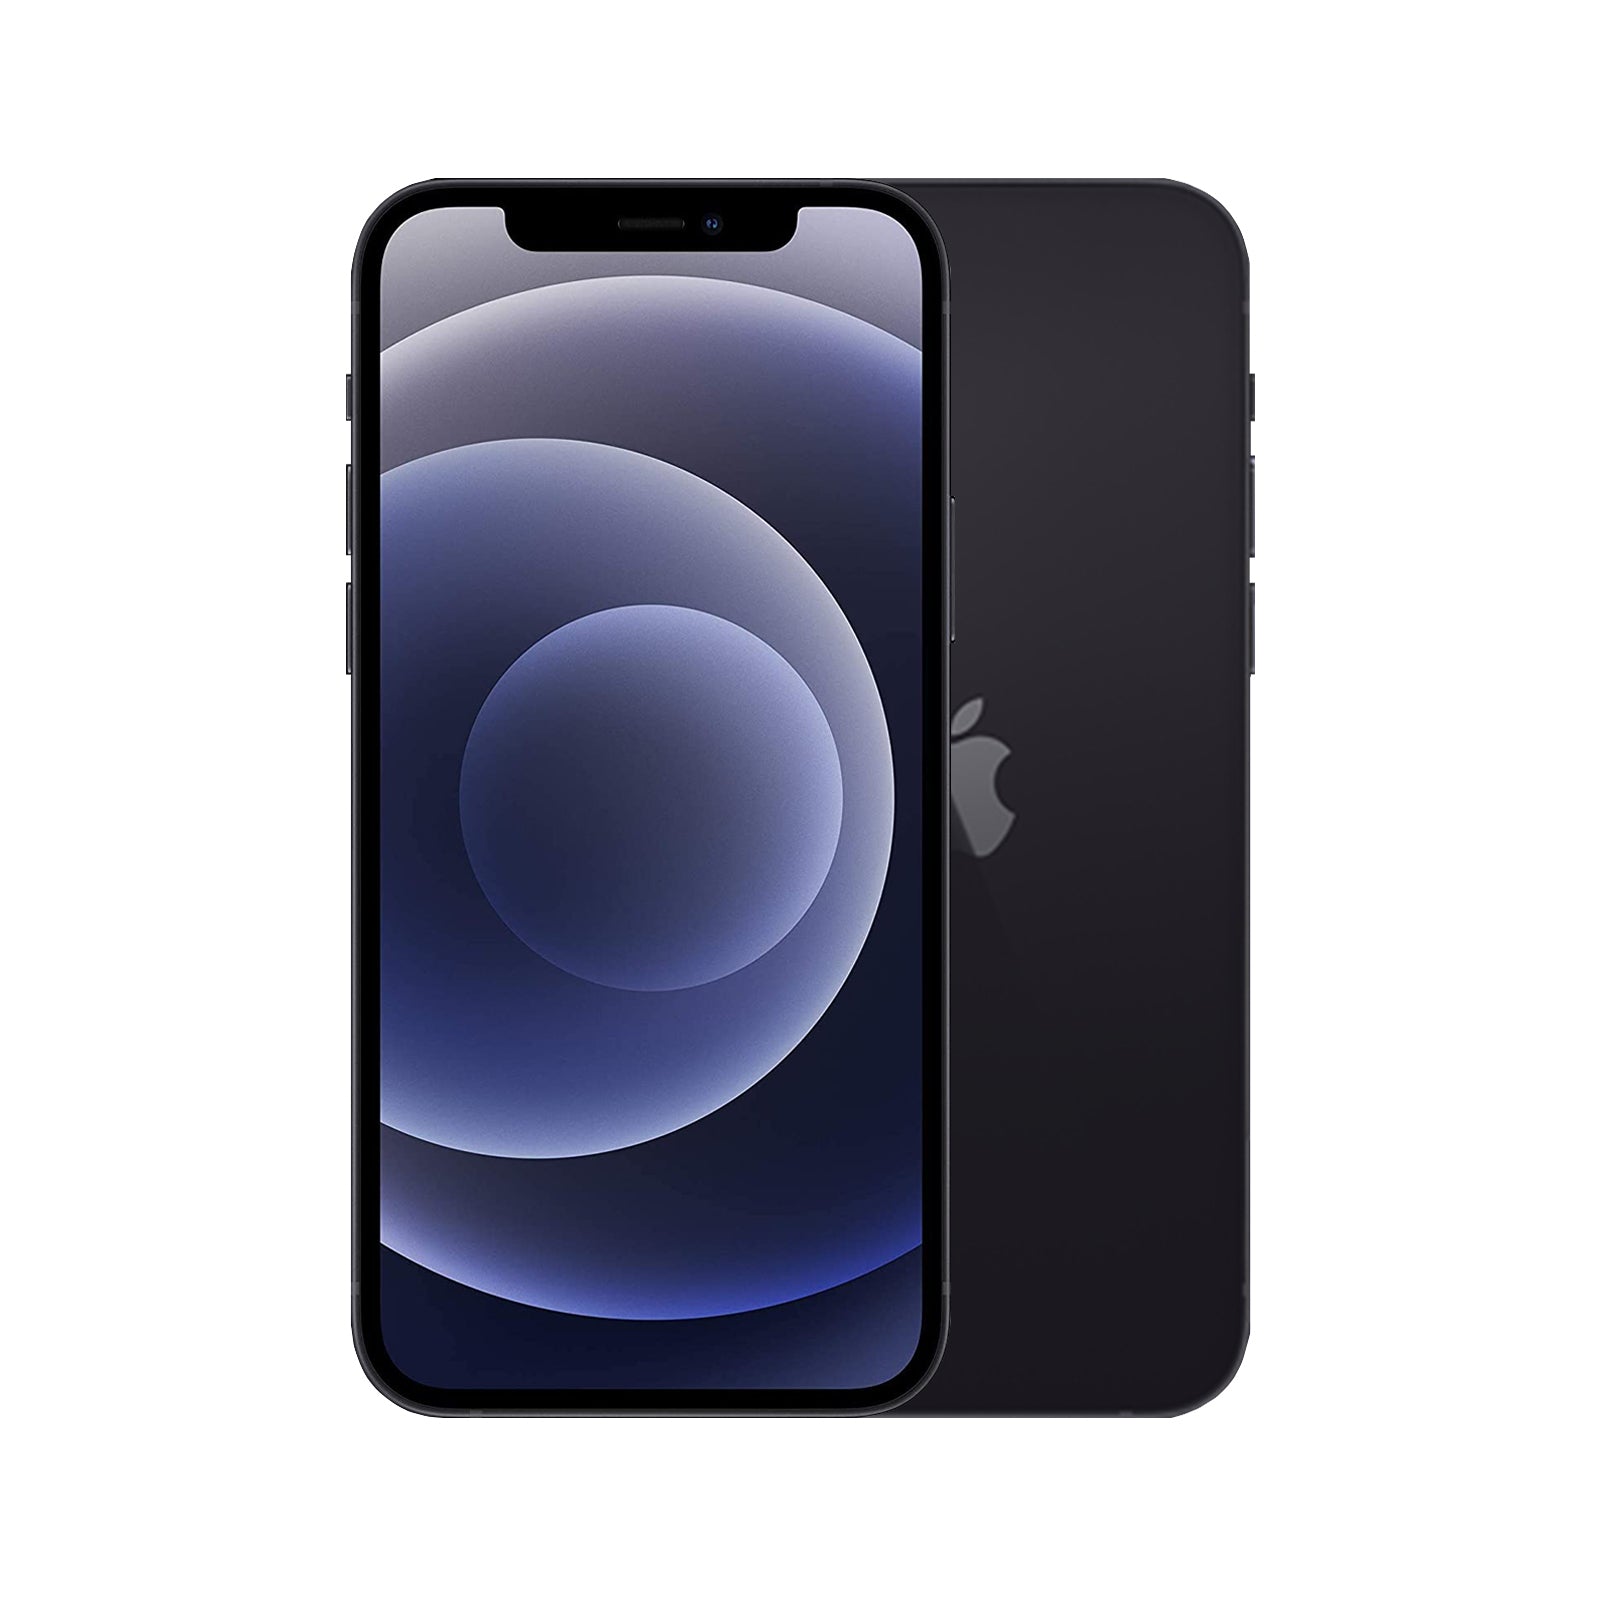 Apple iPhone 12 128GB Black - Good - Refurbished